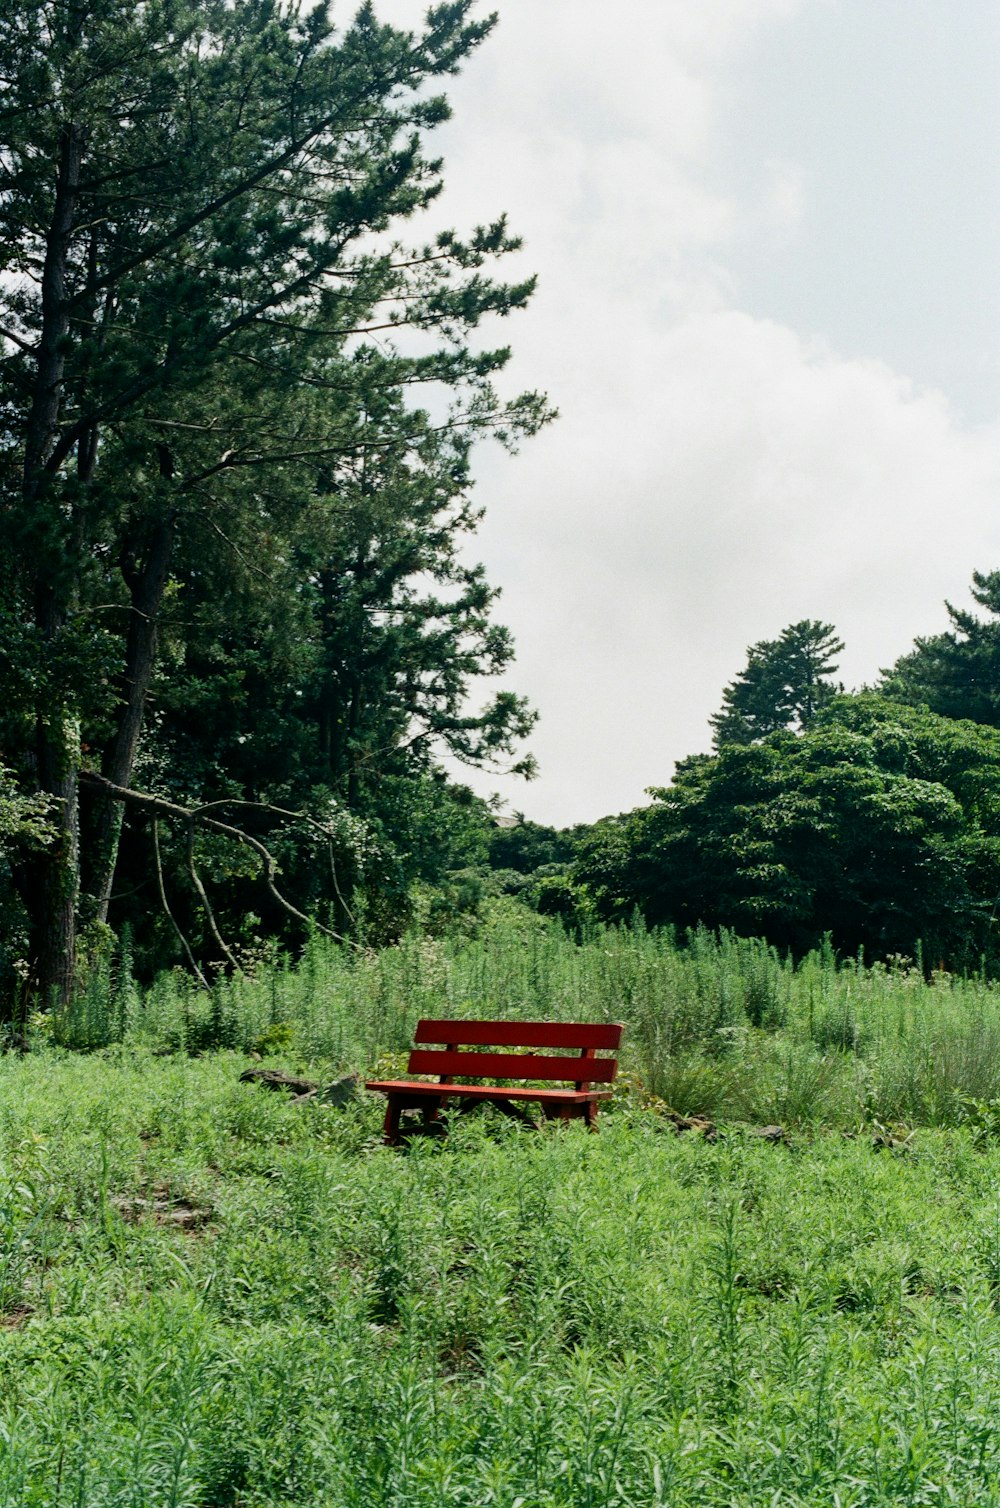 a bench in a grassy field